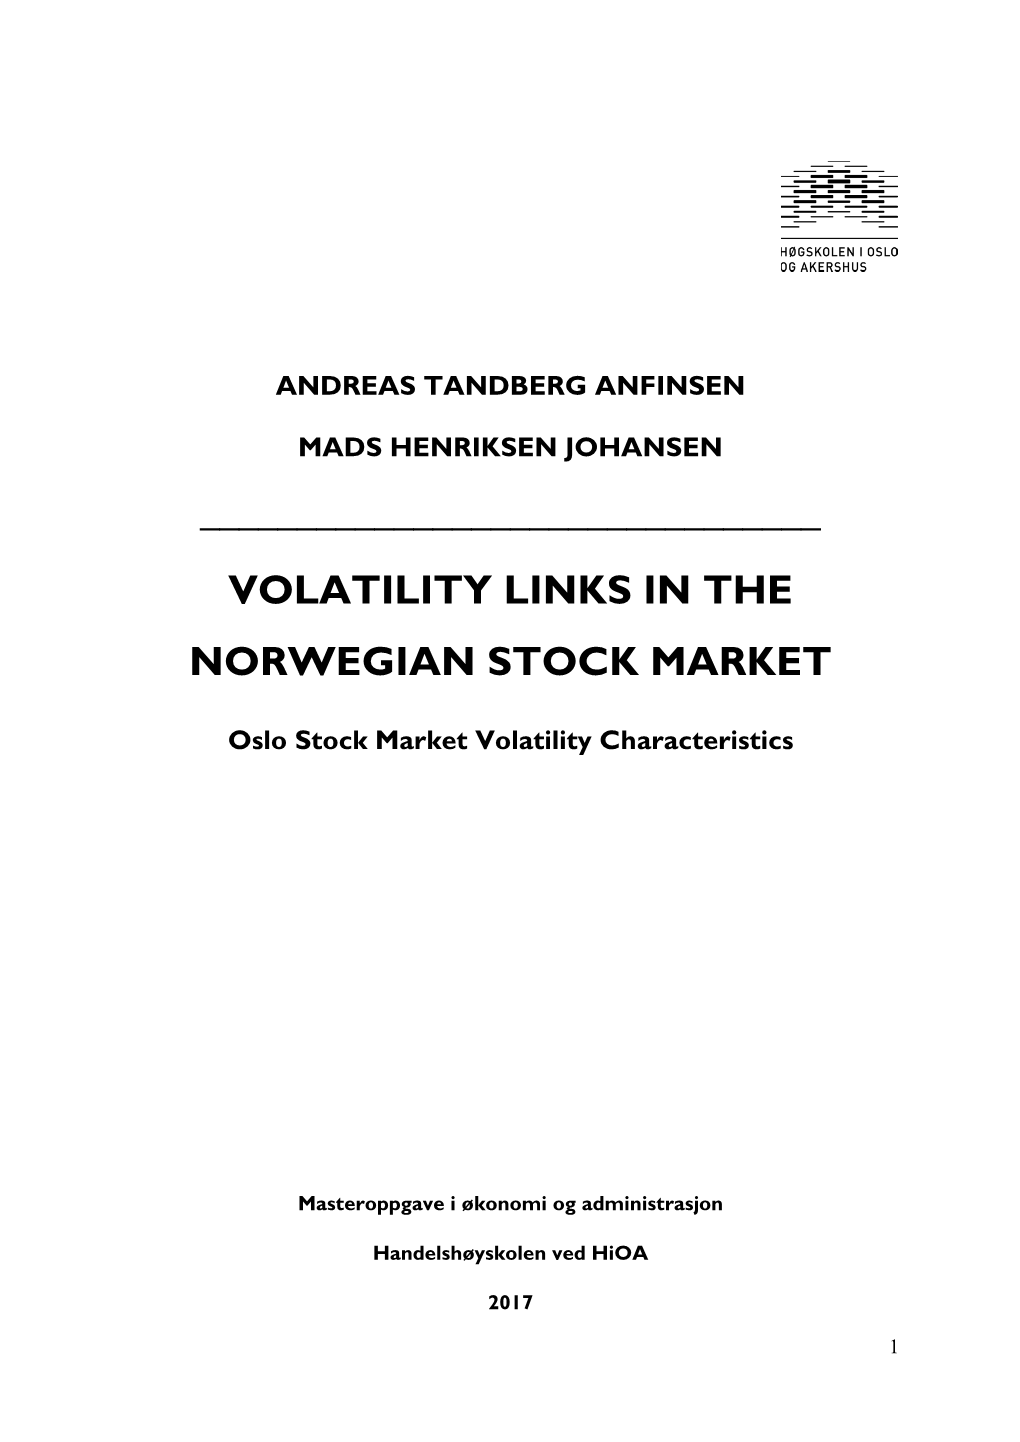 Volatility Links in the Norwegian Stock Market